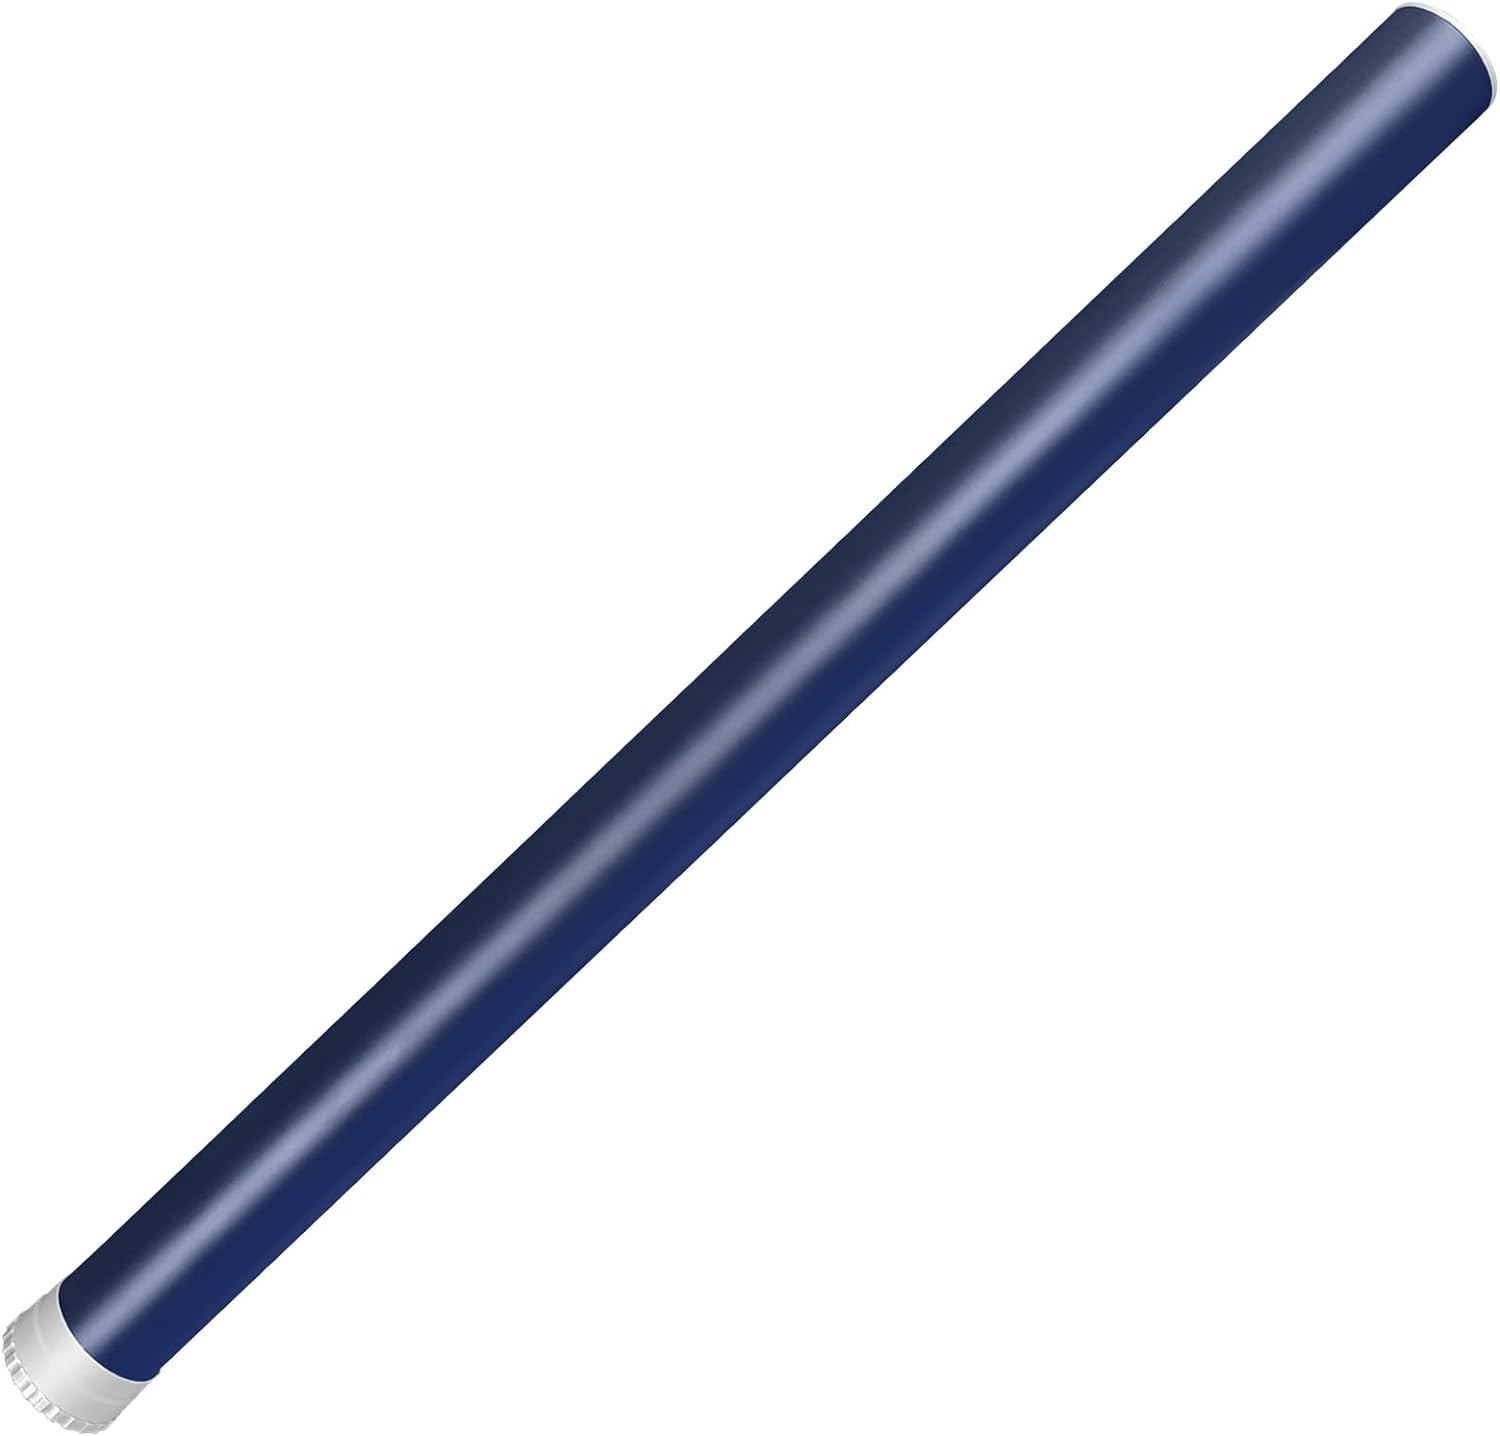 Z Aventik Carbon Fly Fishing Rod Tube(Case) CNC Aluminum Cap – fits Any 9ft  4pcs Fly Rod